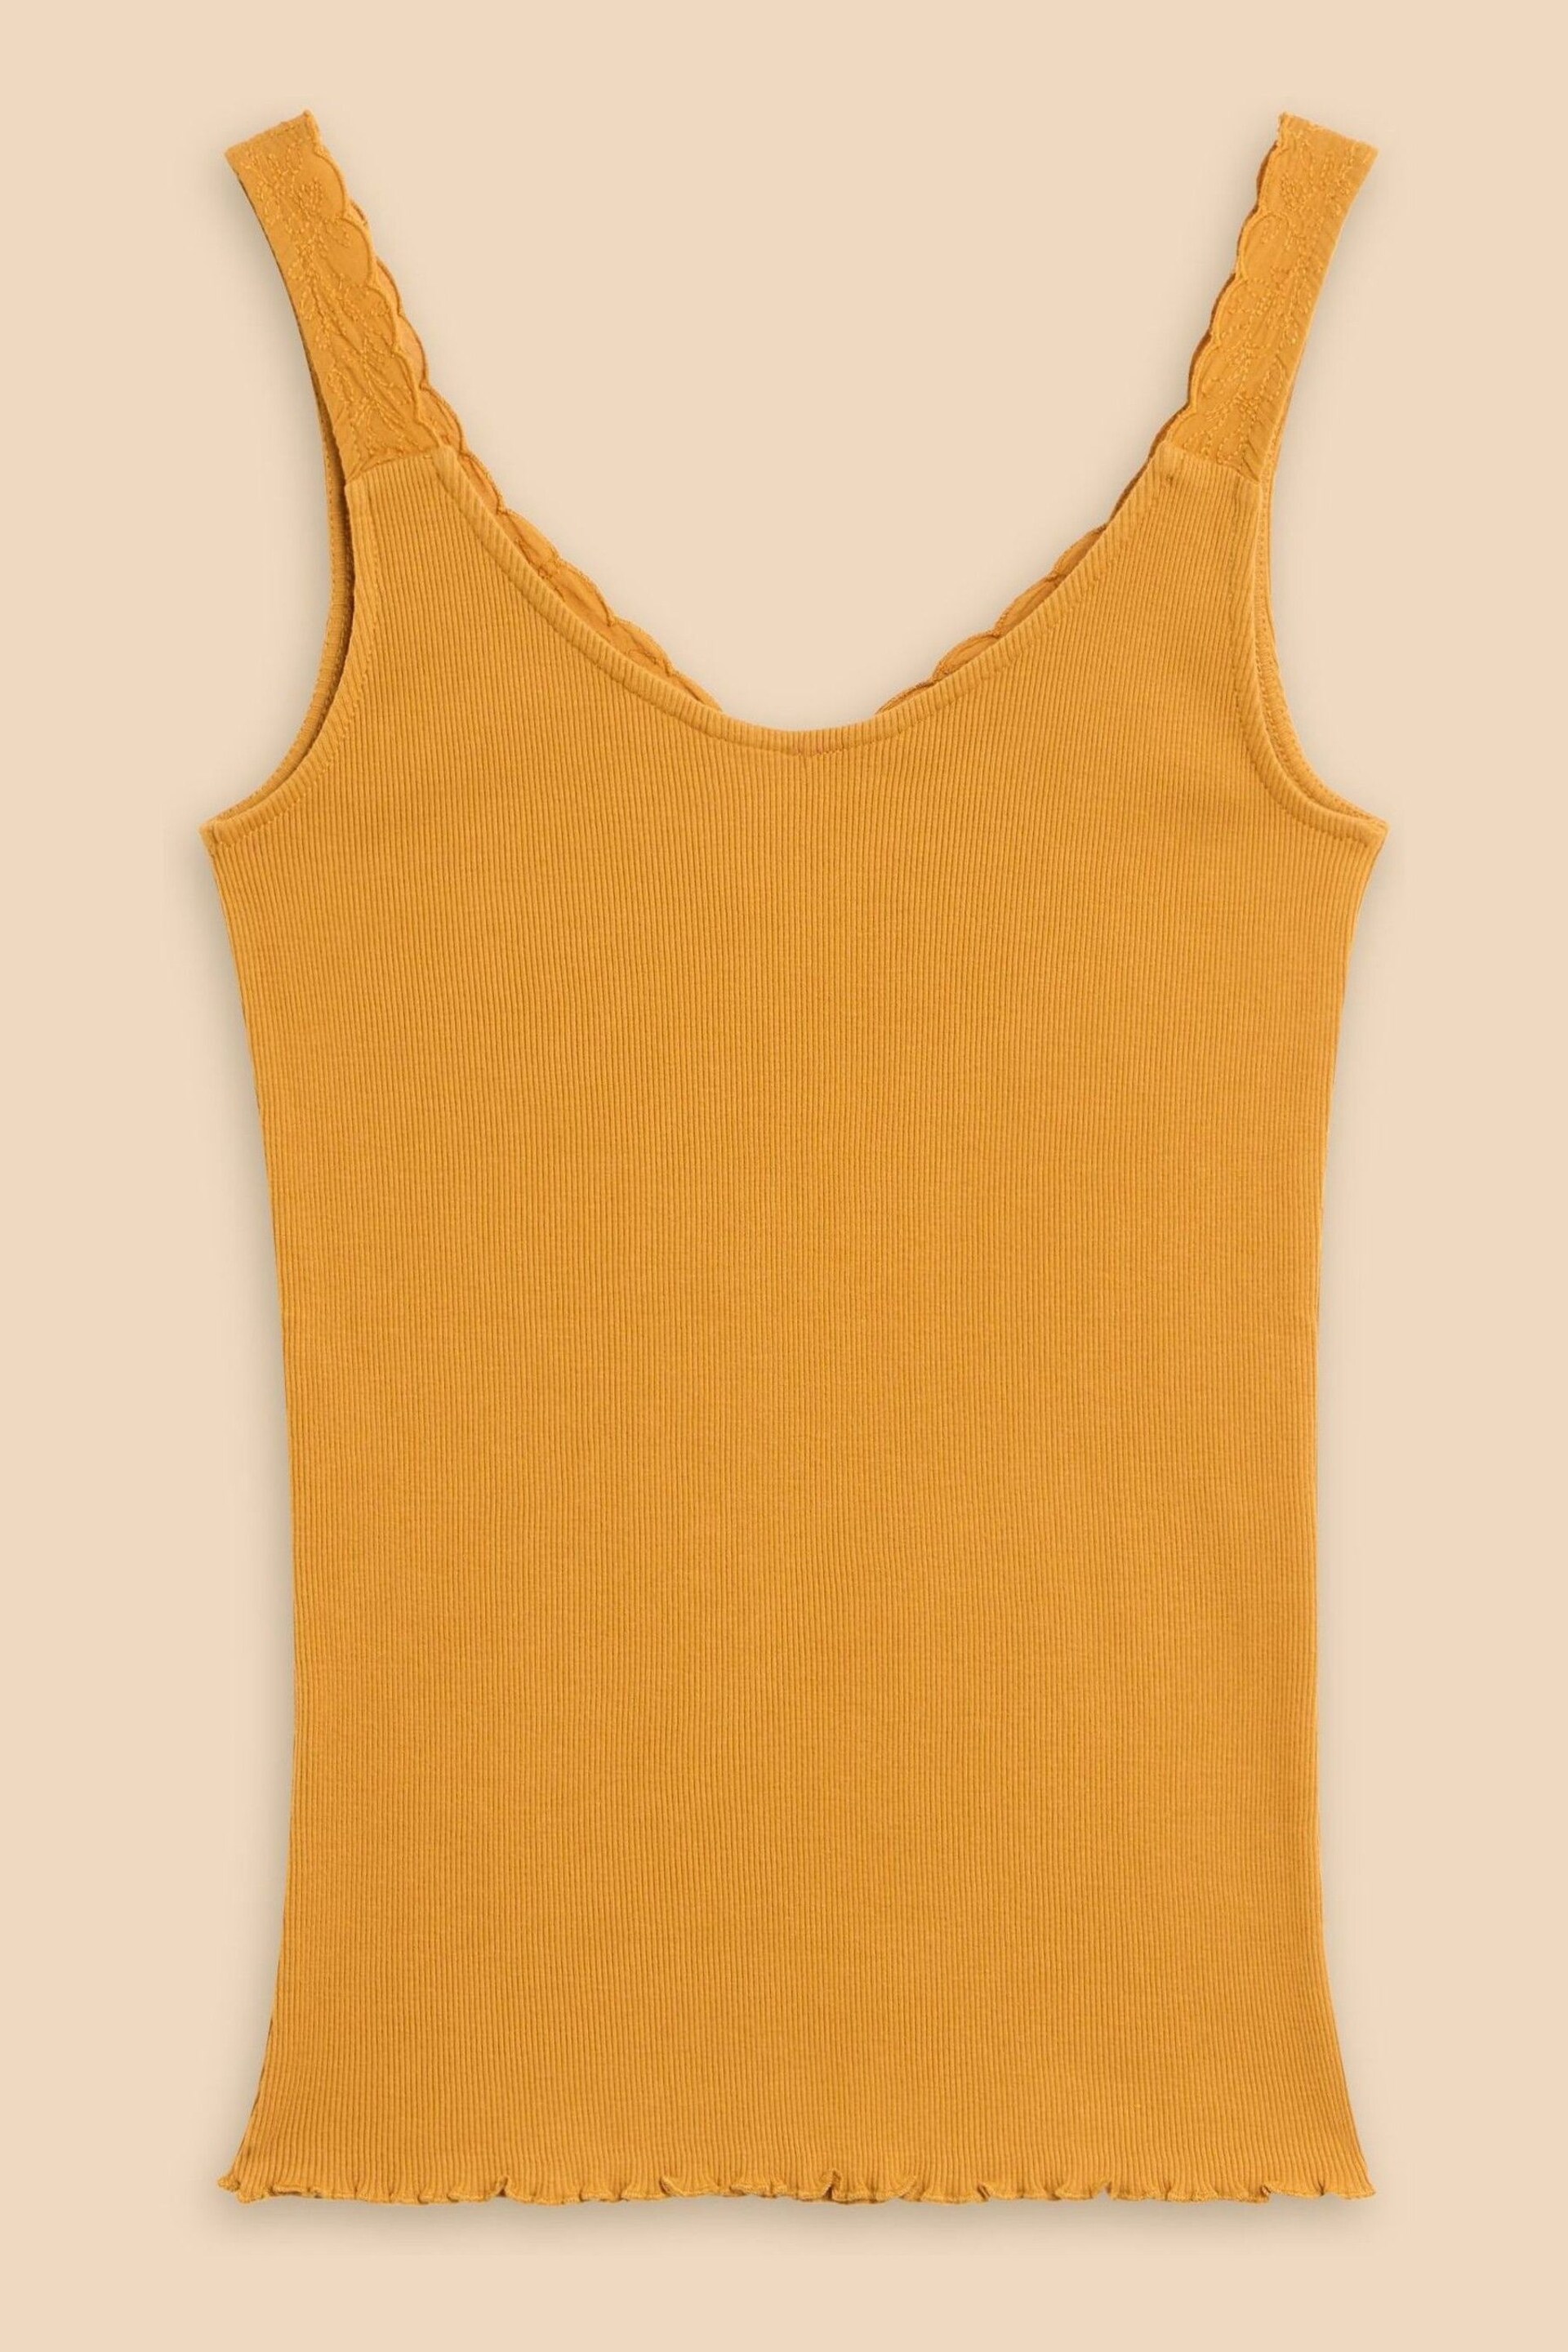 White Stuff Orange Seabreeze Vest - Image 6 of 7